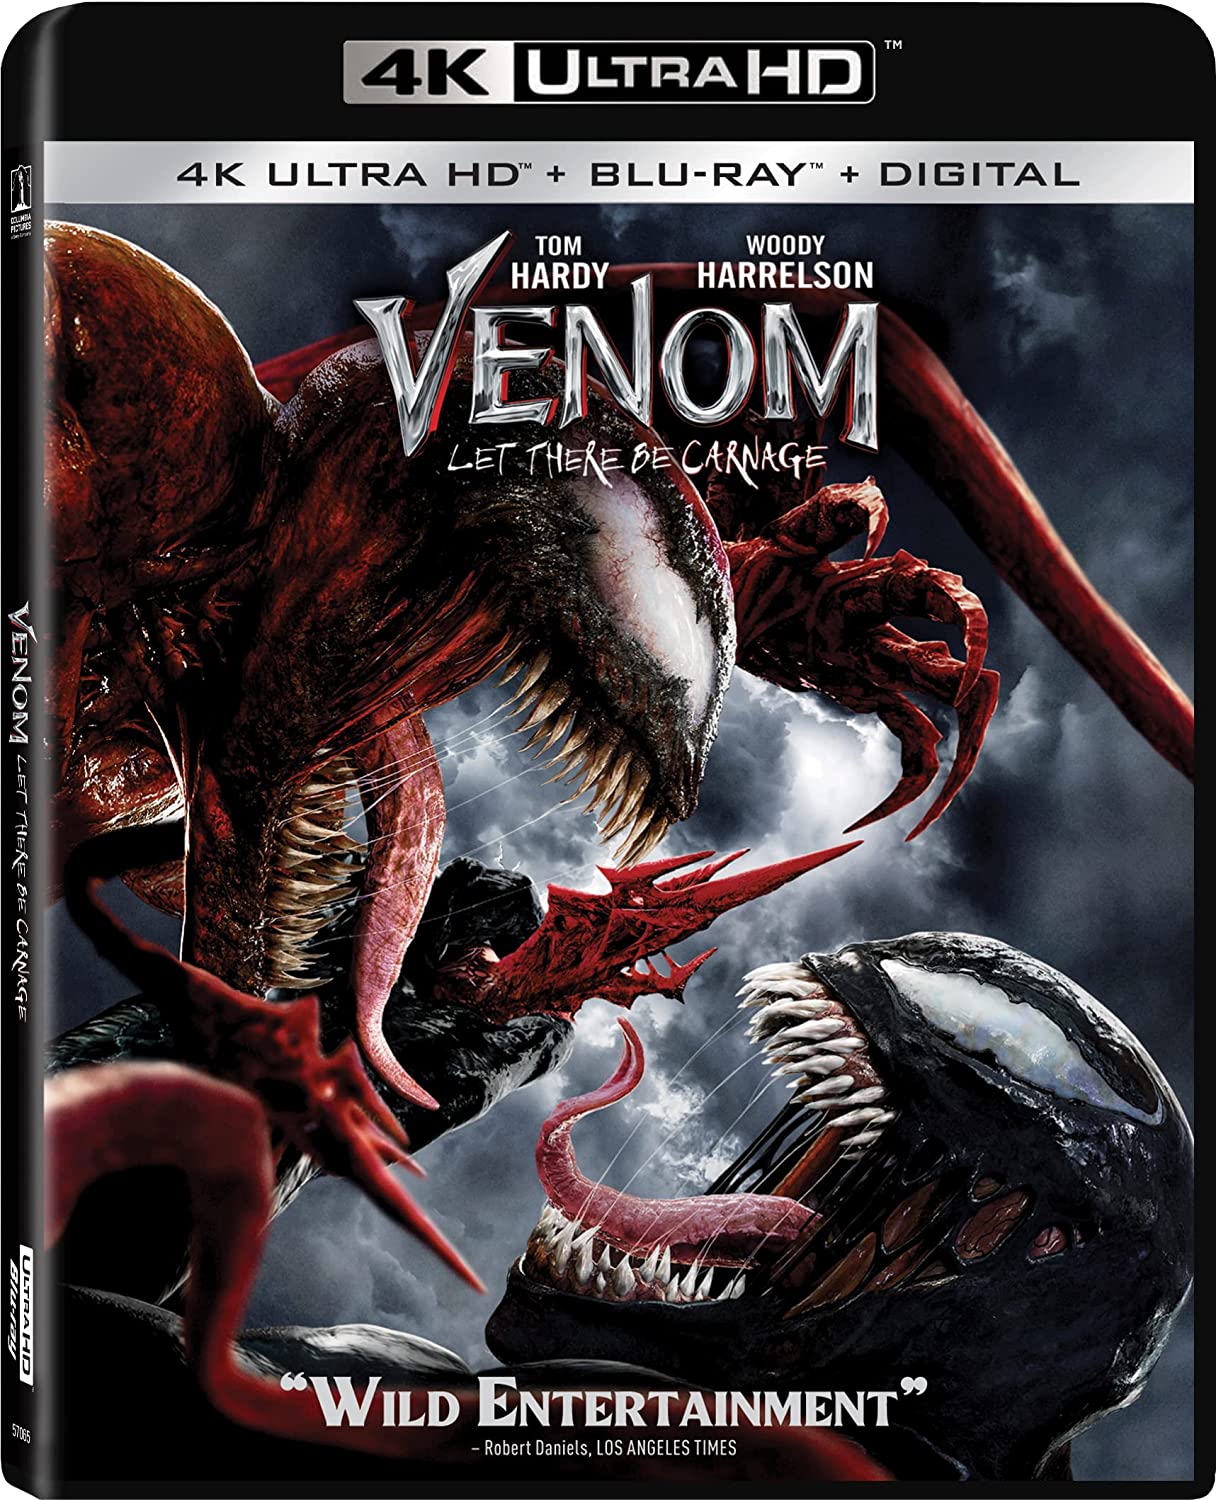 Stiahni si UHD Filmy Venom 2: Carnage prichazi / Venom: Let There Be Carnage (2021)(CZ/EN/HUN/PL)(4K Ultra HD)[HEVC 2160p BDRip HDR10] = CSFD 57%